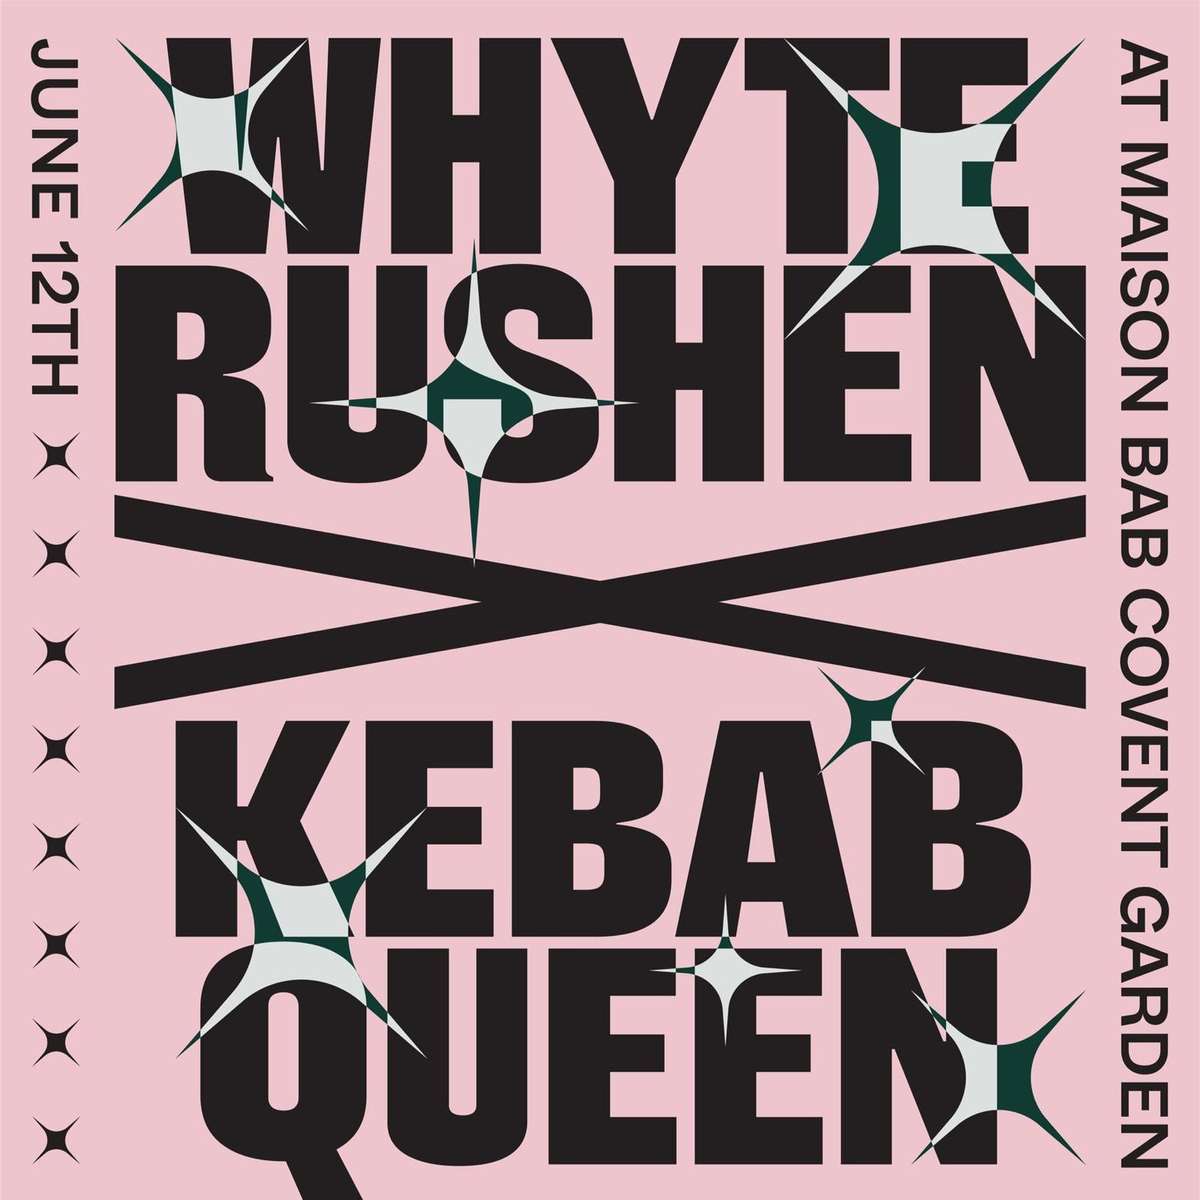 Whyte Rushen x Kebab Queen